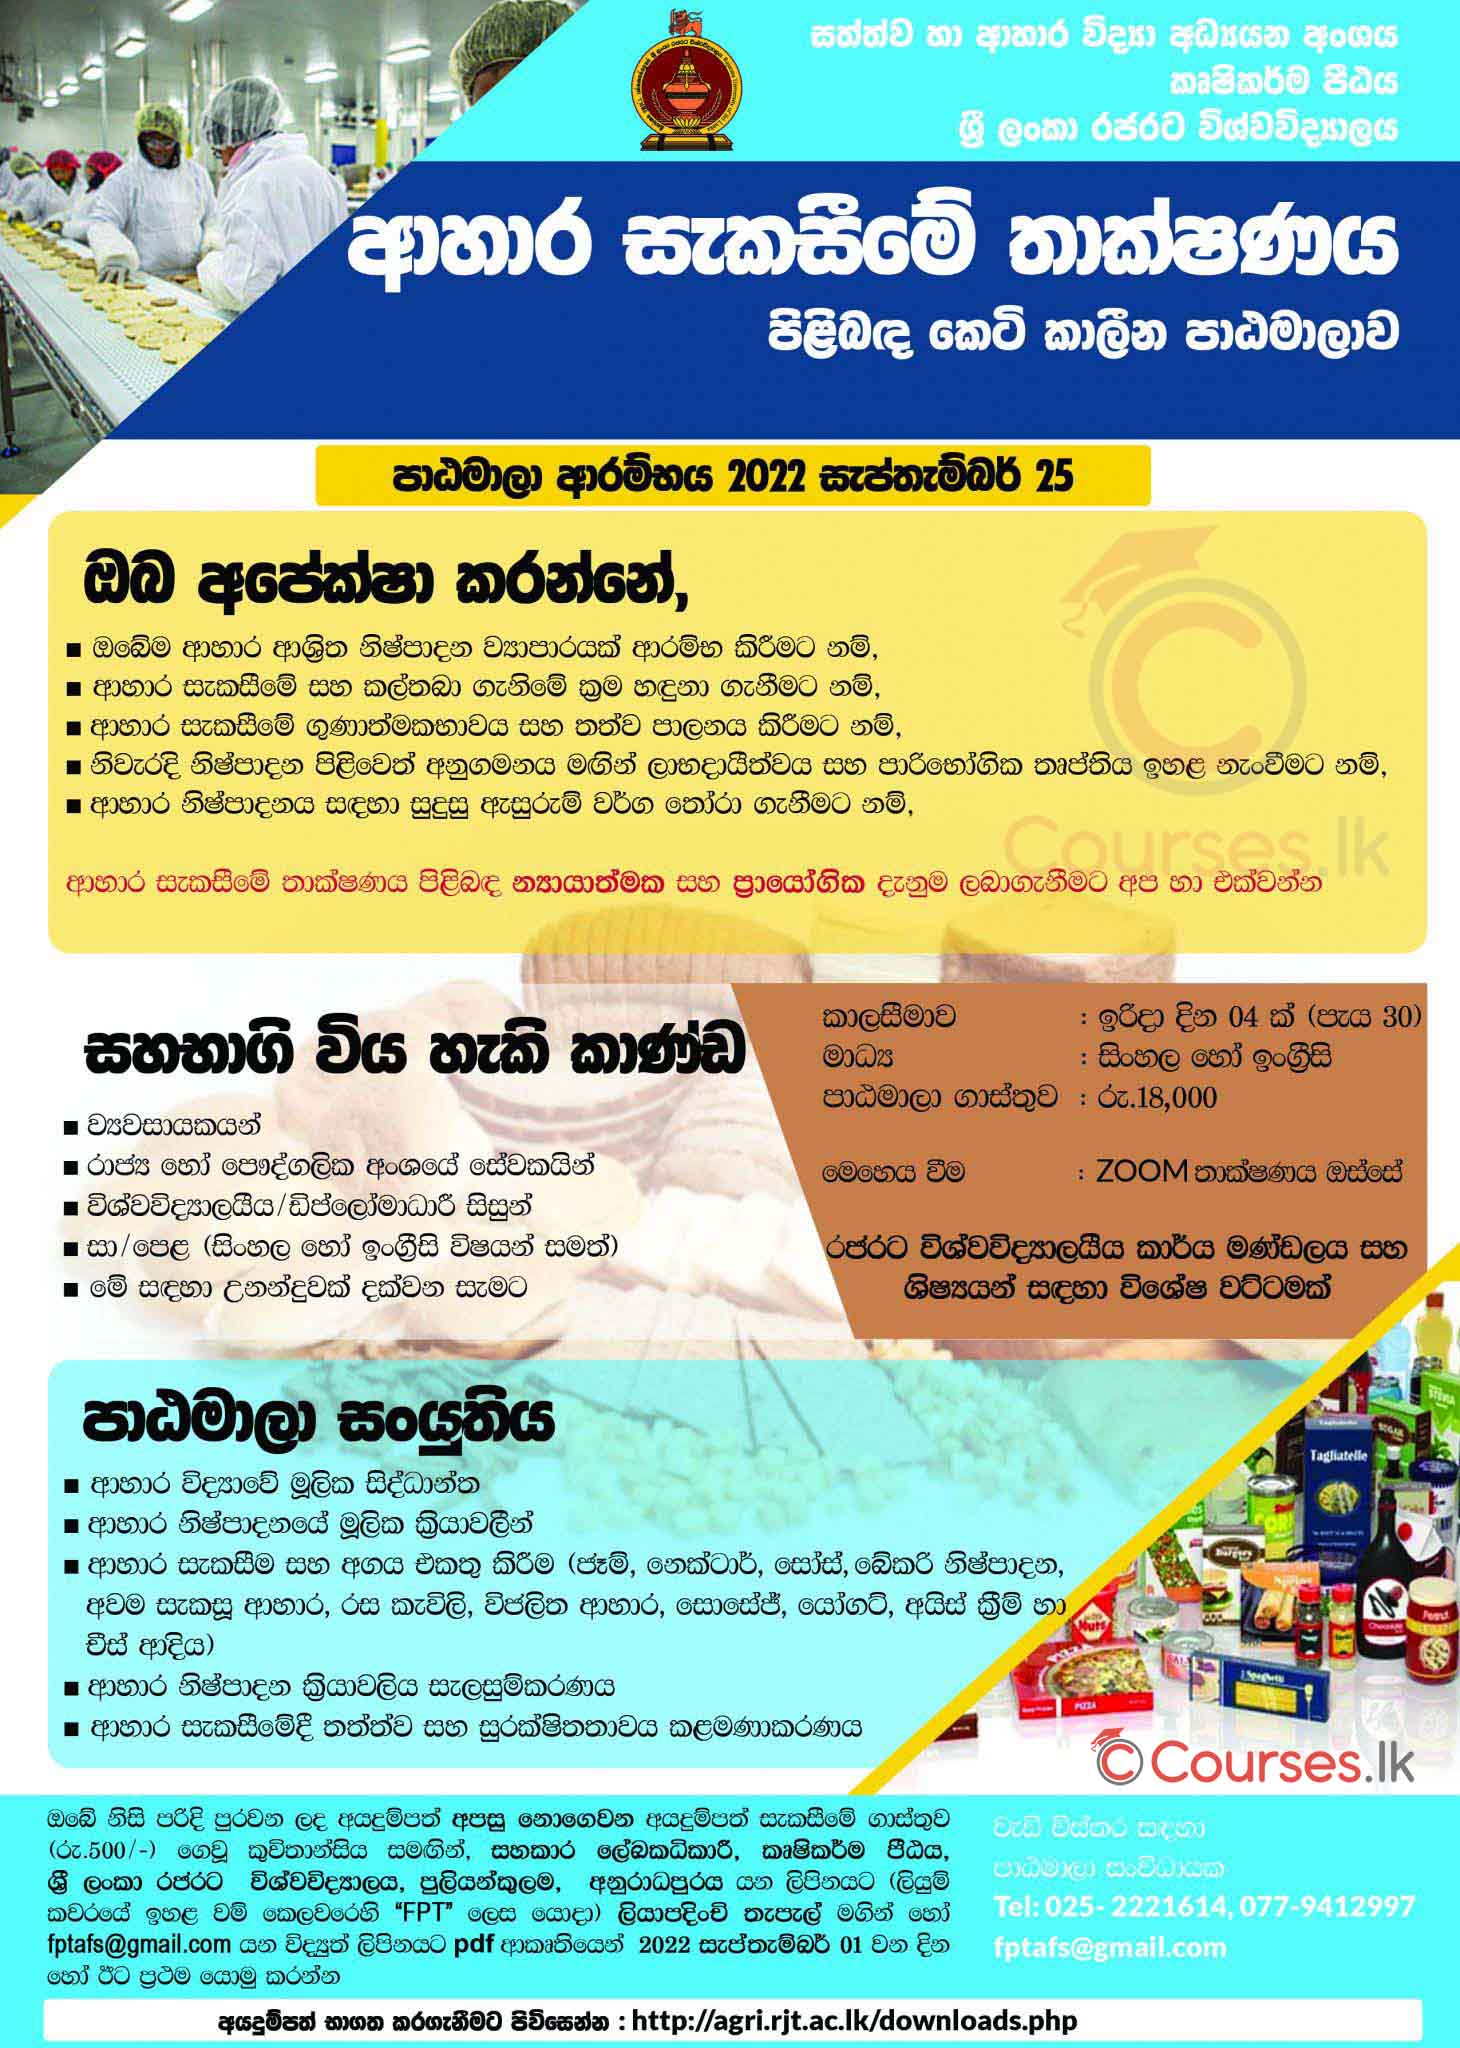 Short Course in Food Processing Technology 2022 - Rajarata University of Sri Lanka